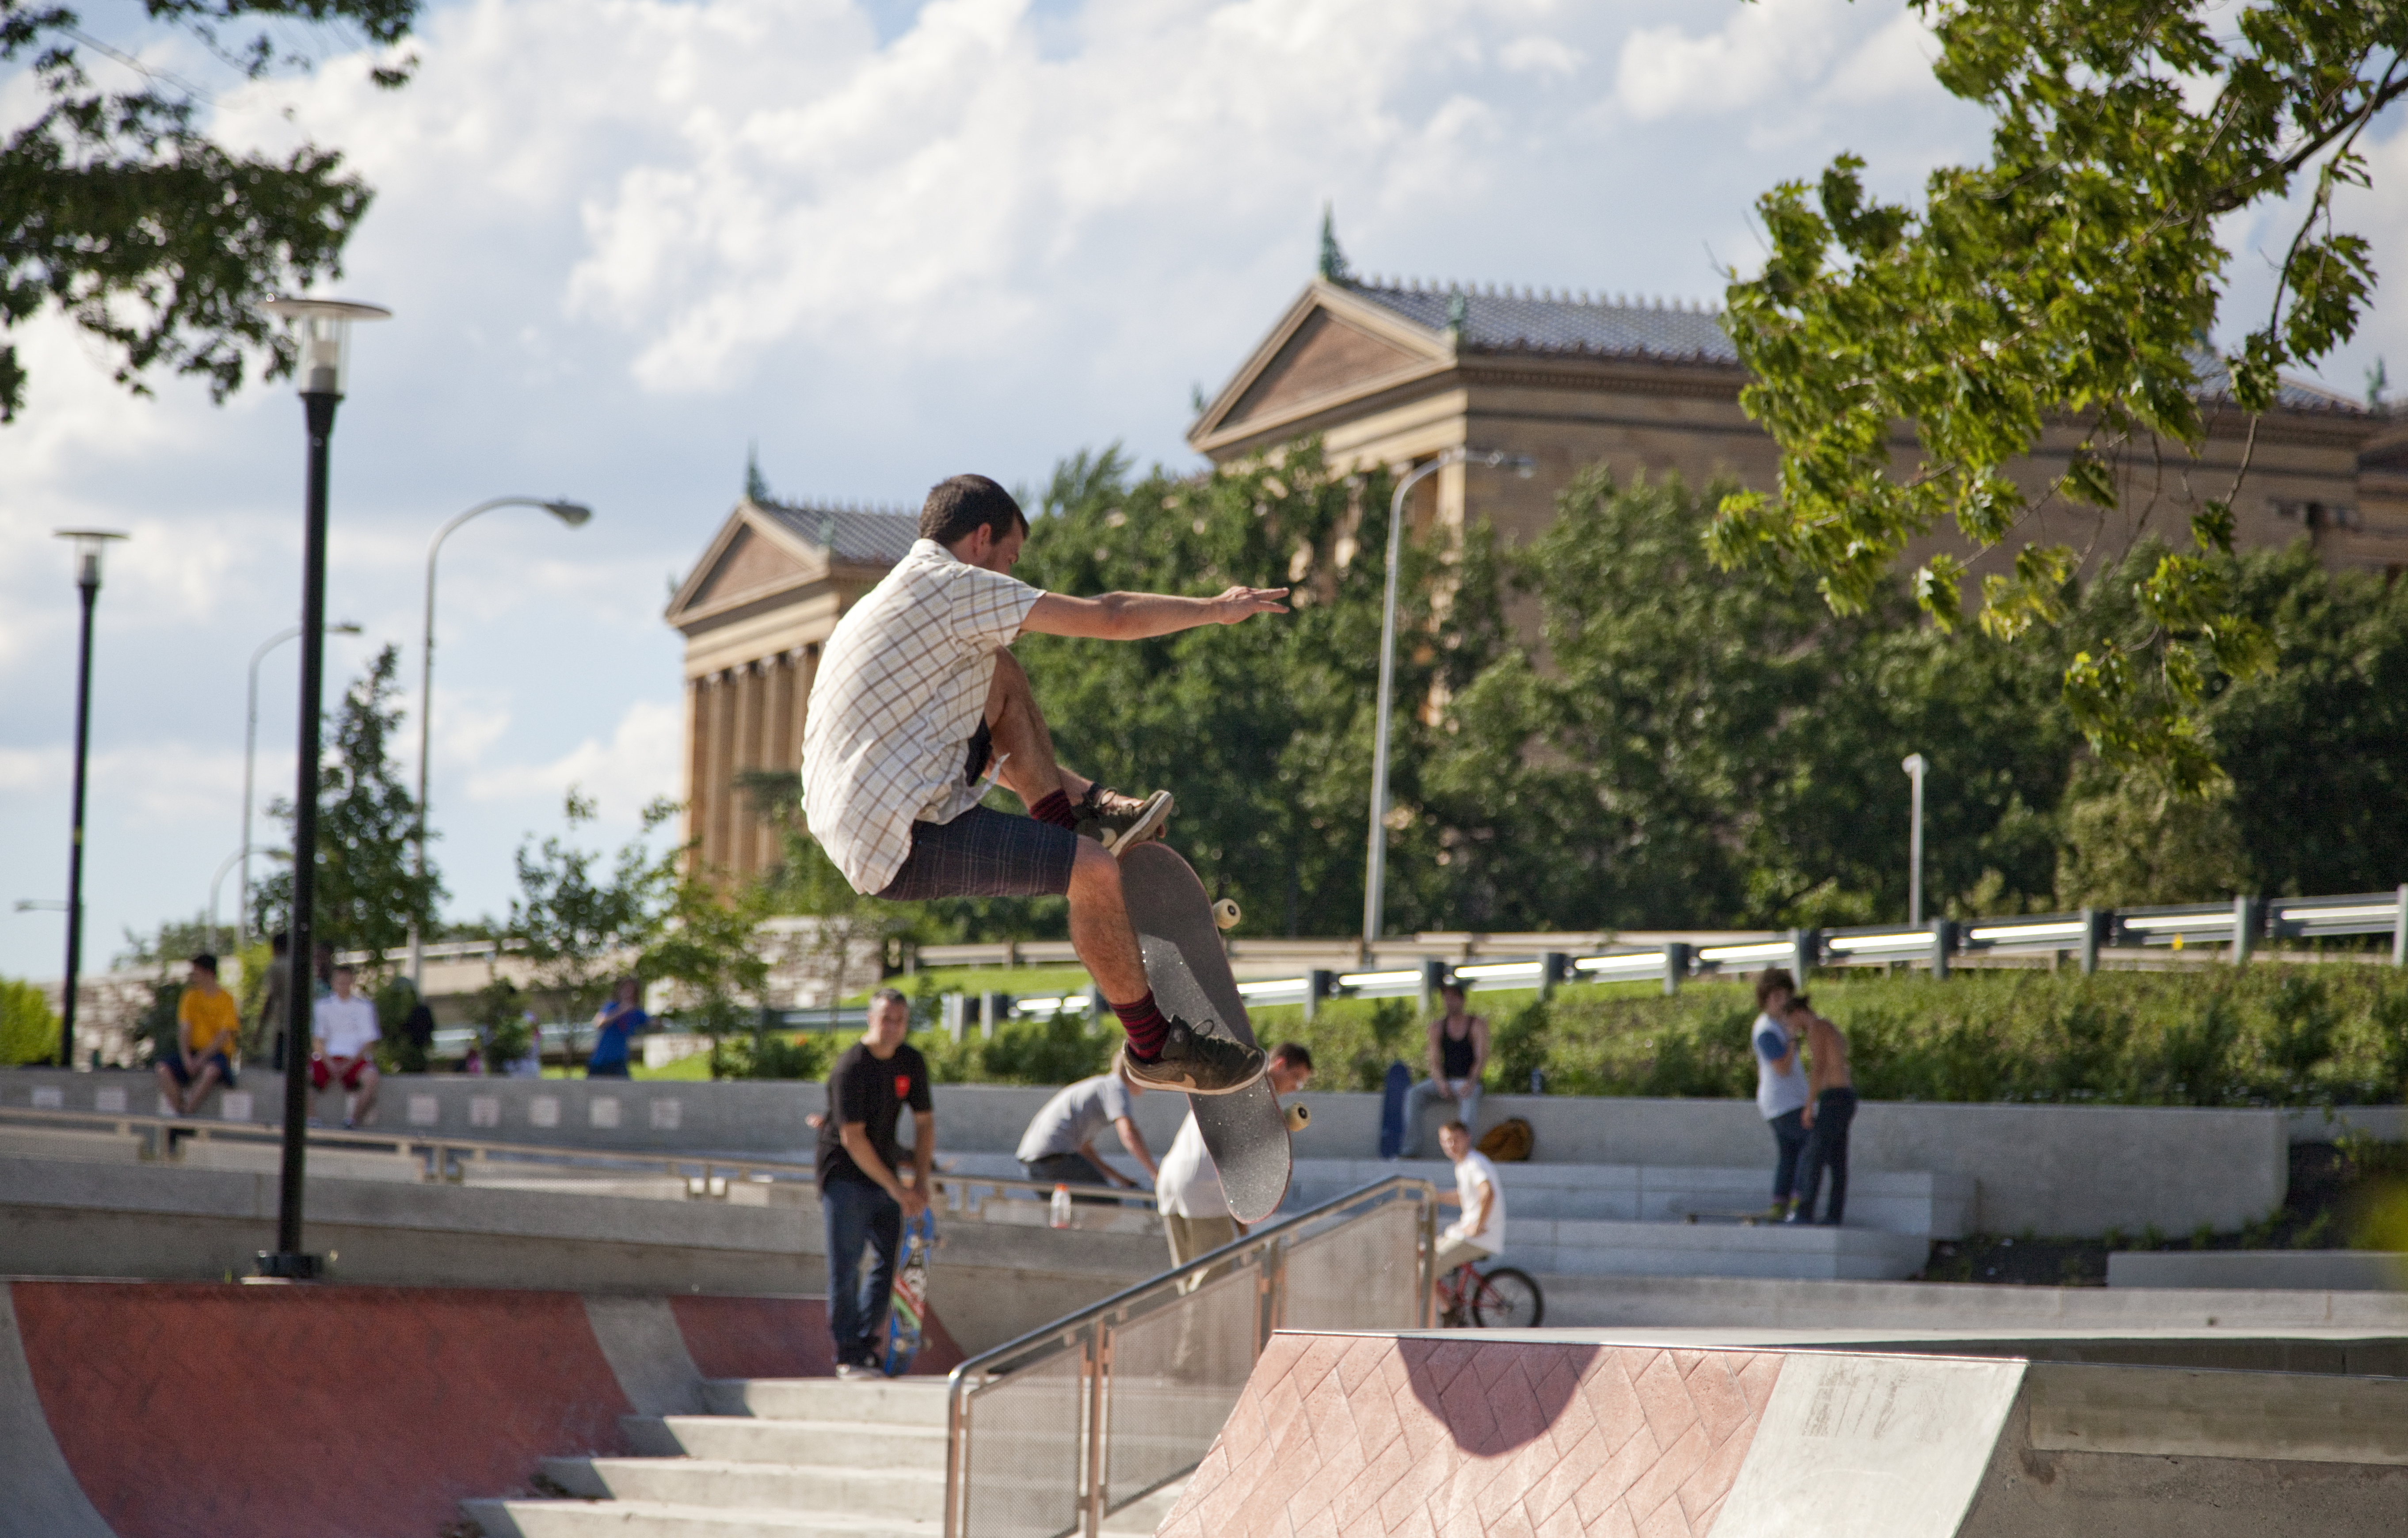 Skate Parks and Skateboarders - Encyclopedia of Greater Philadelphia